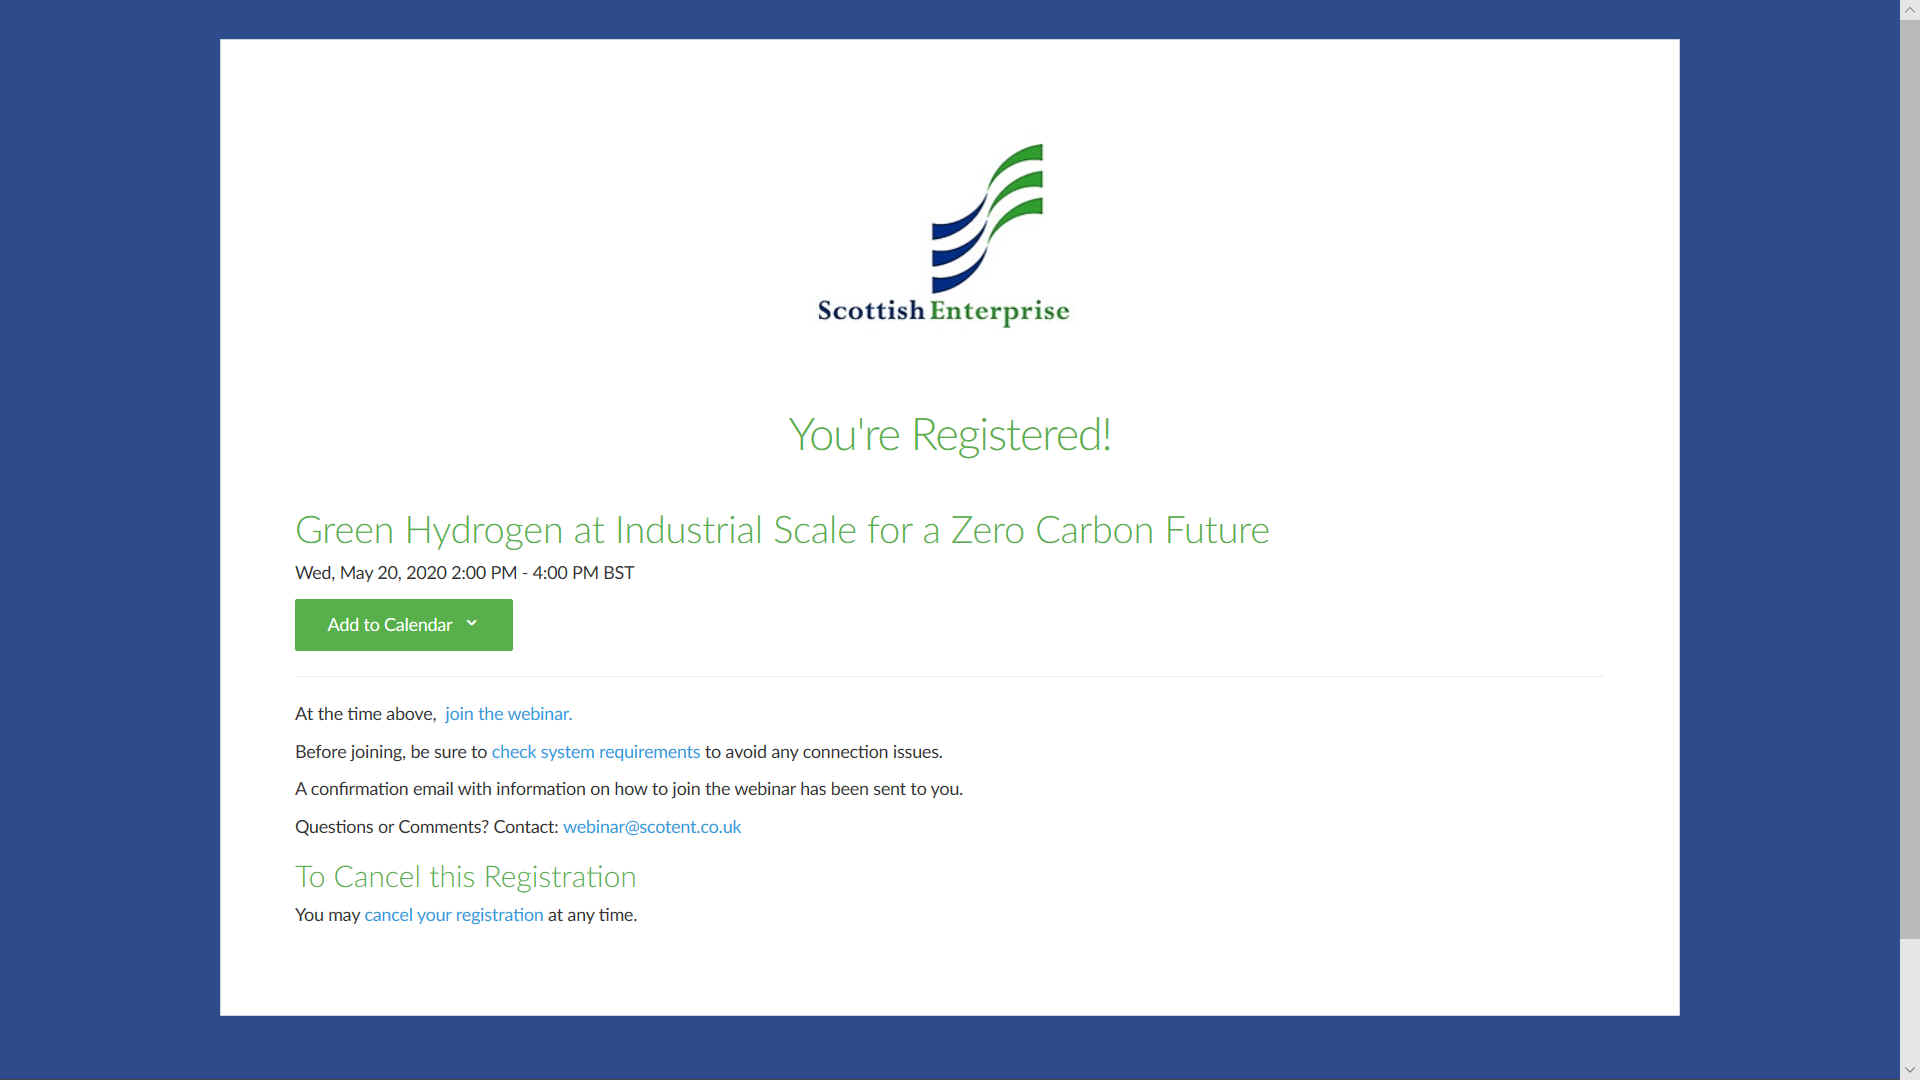 Scottish Enterprise Gren Hydrogen for a Zero Carbon Future - Webinar